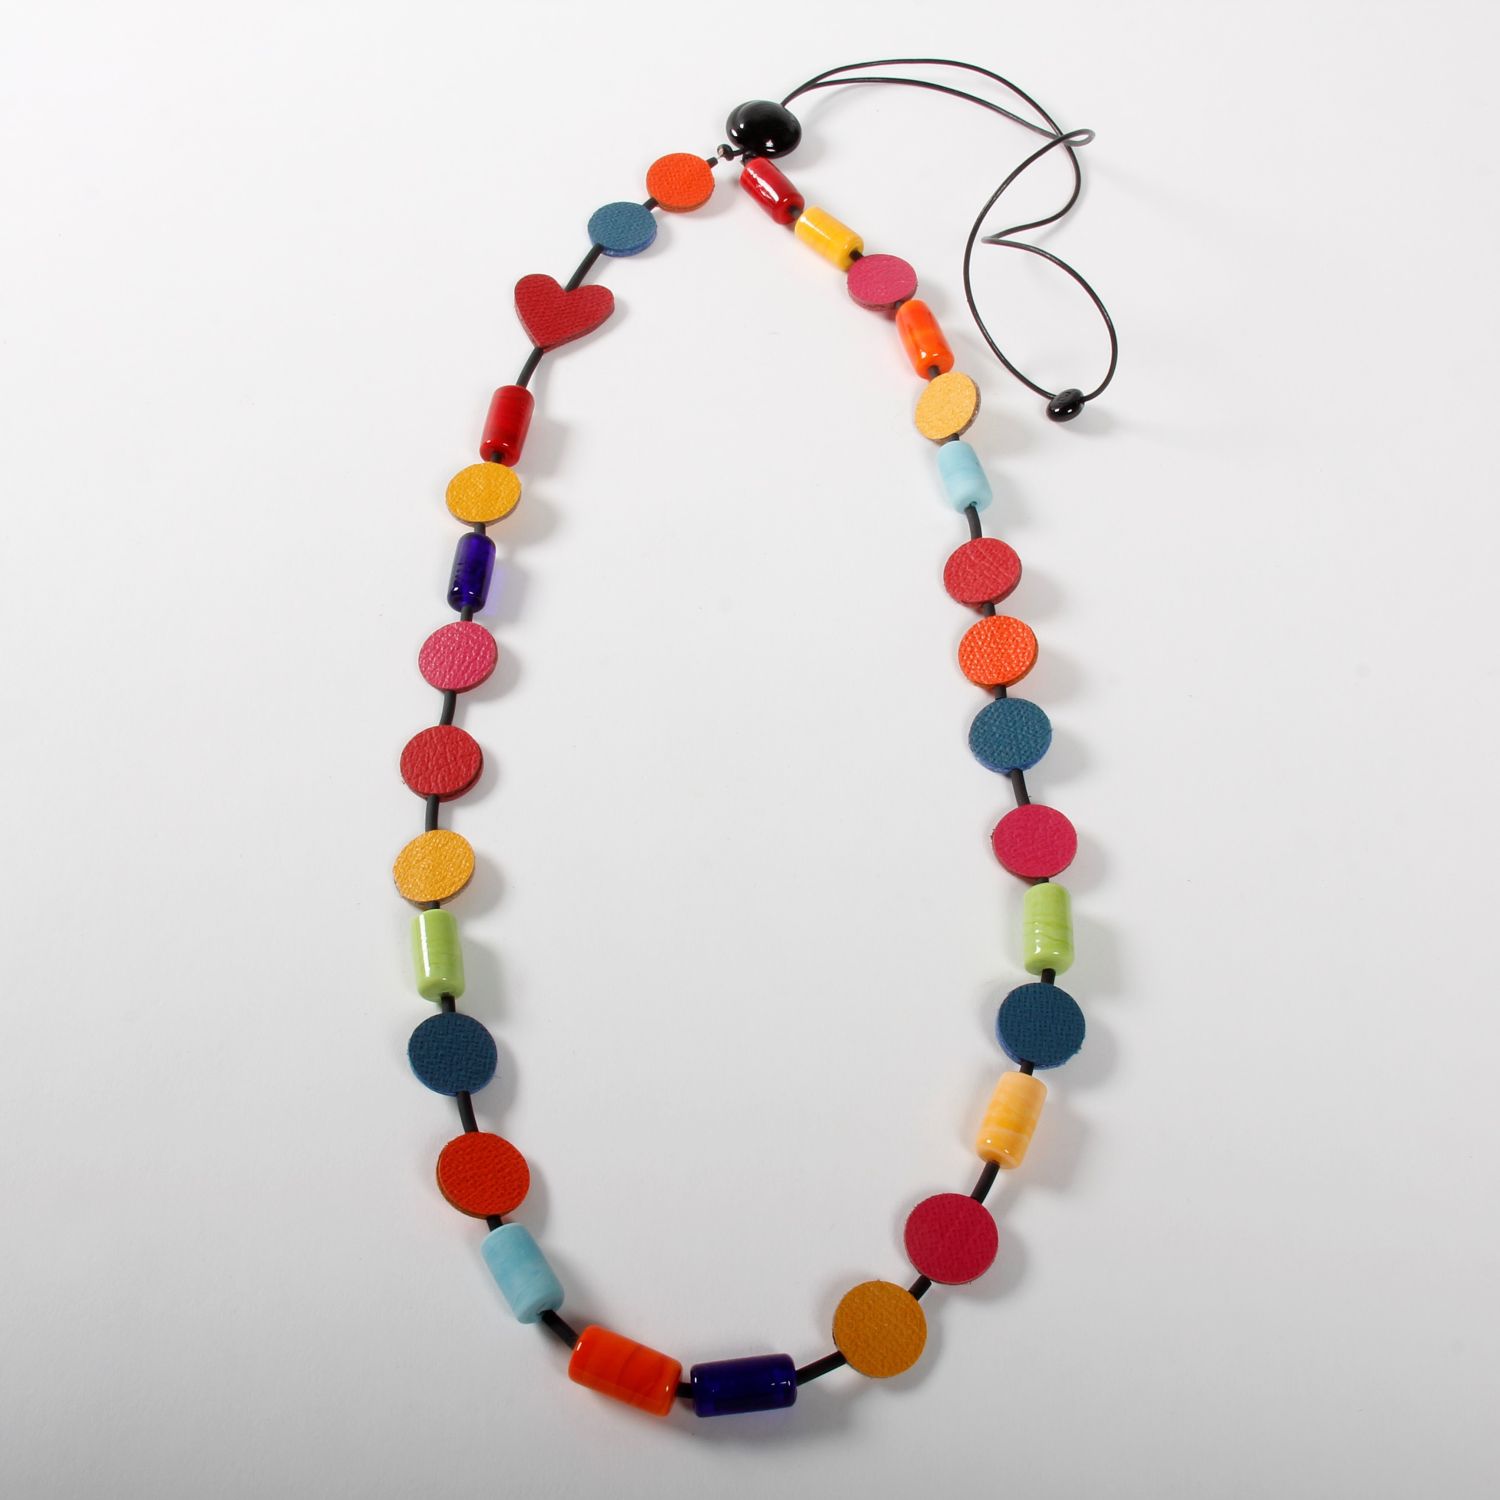 Alicia Niles: Morse Code Necklace “I love ceramics !” Product Image 1 of 2